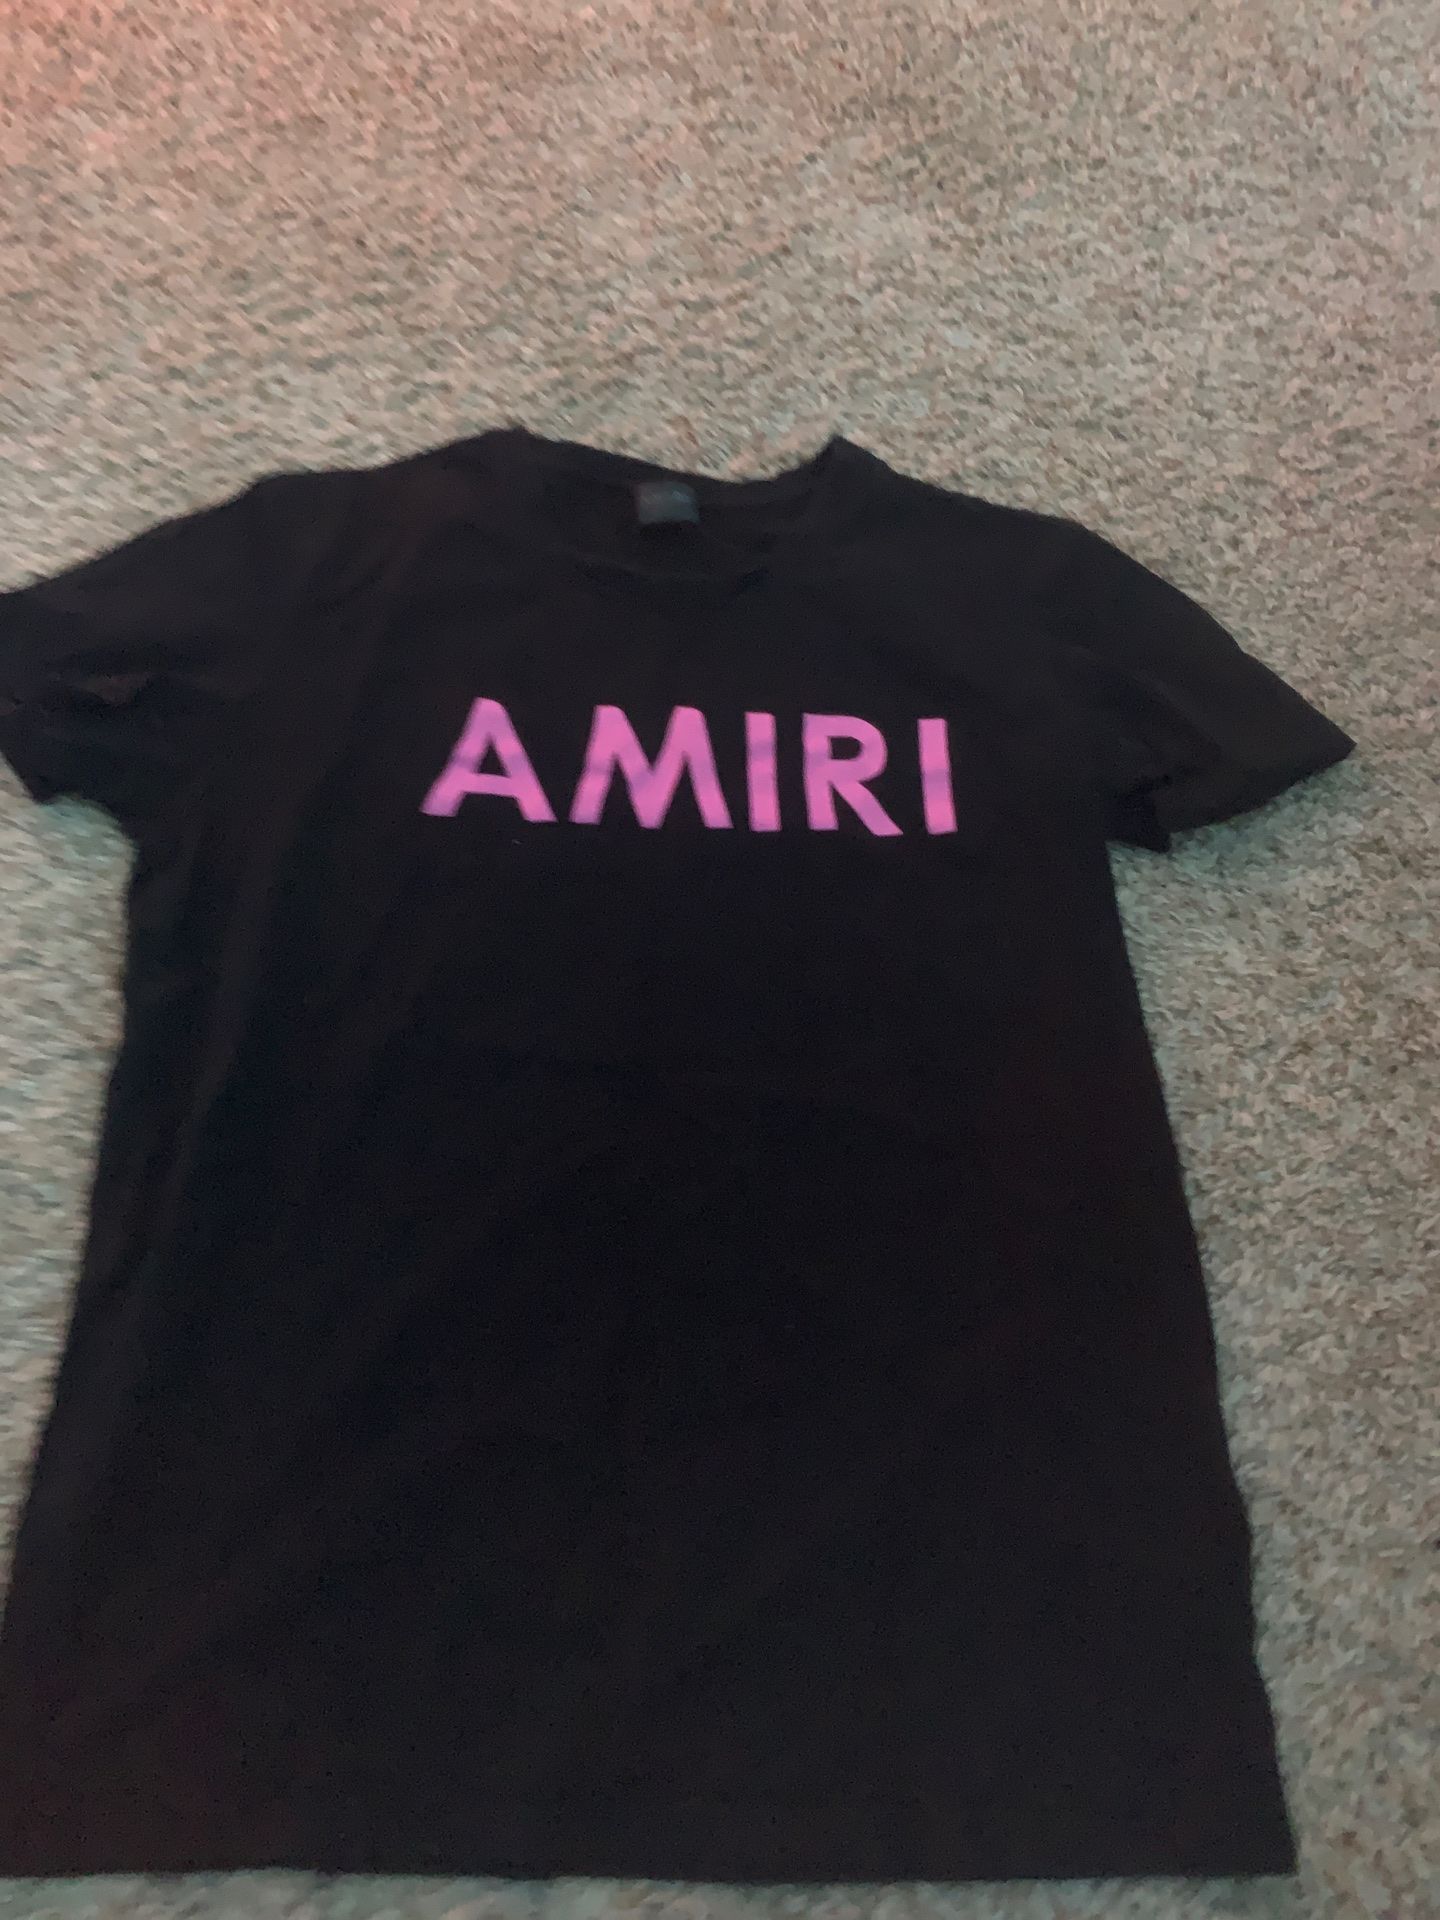 Mike Amiri t shirt